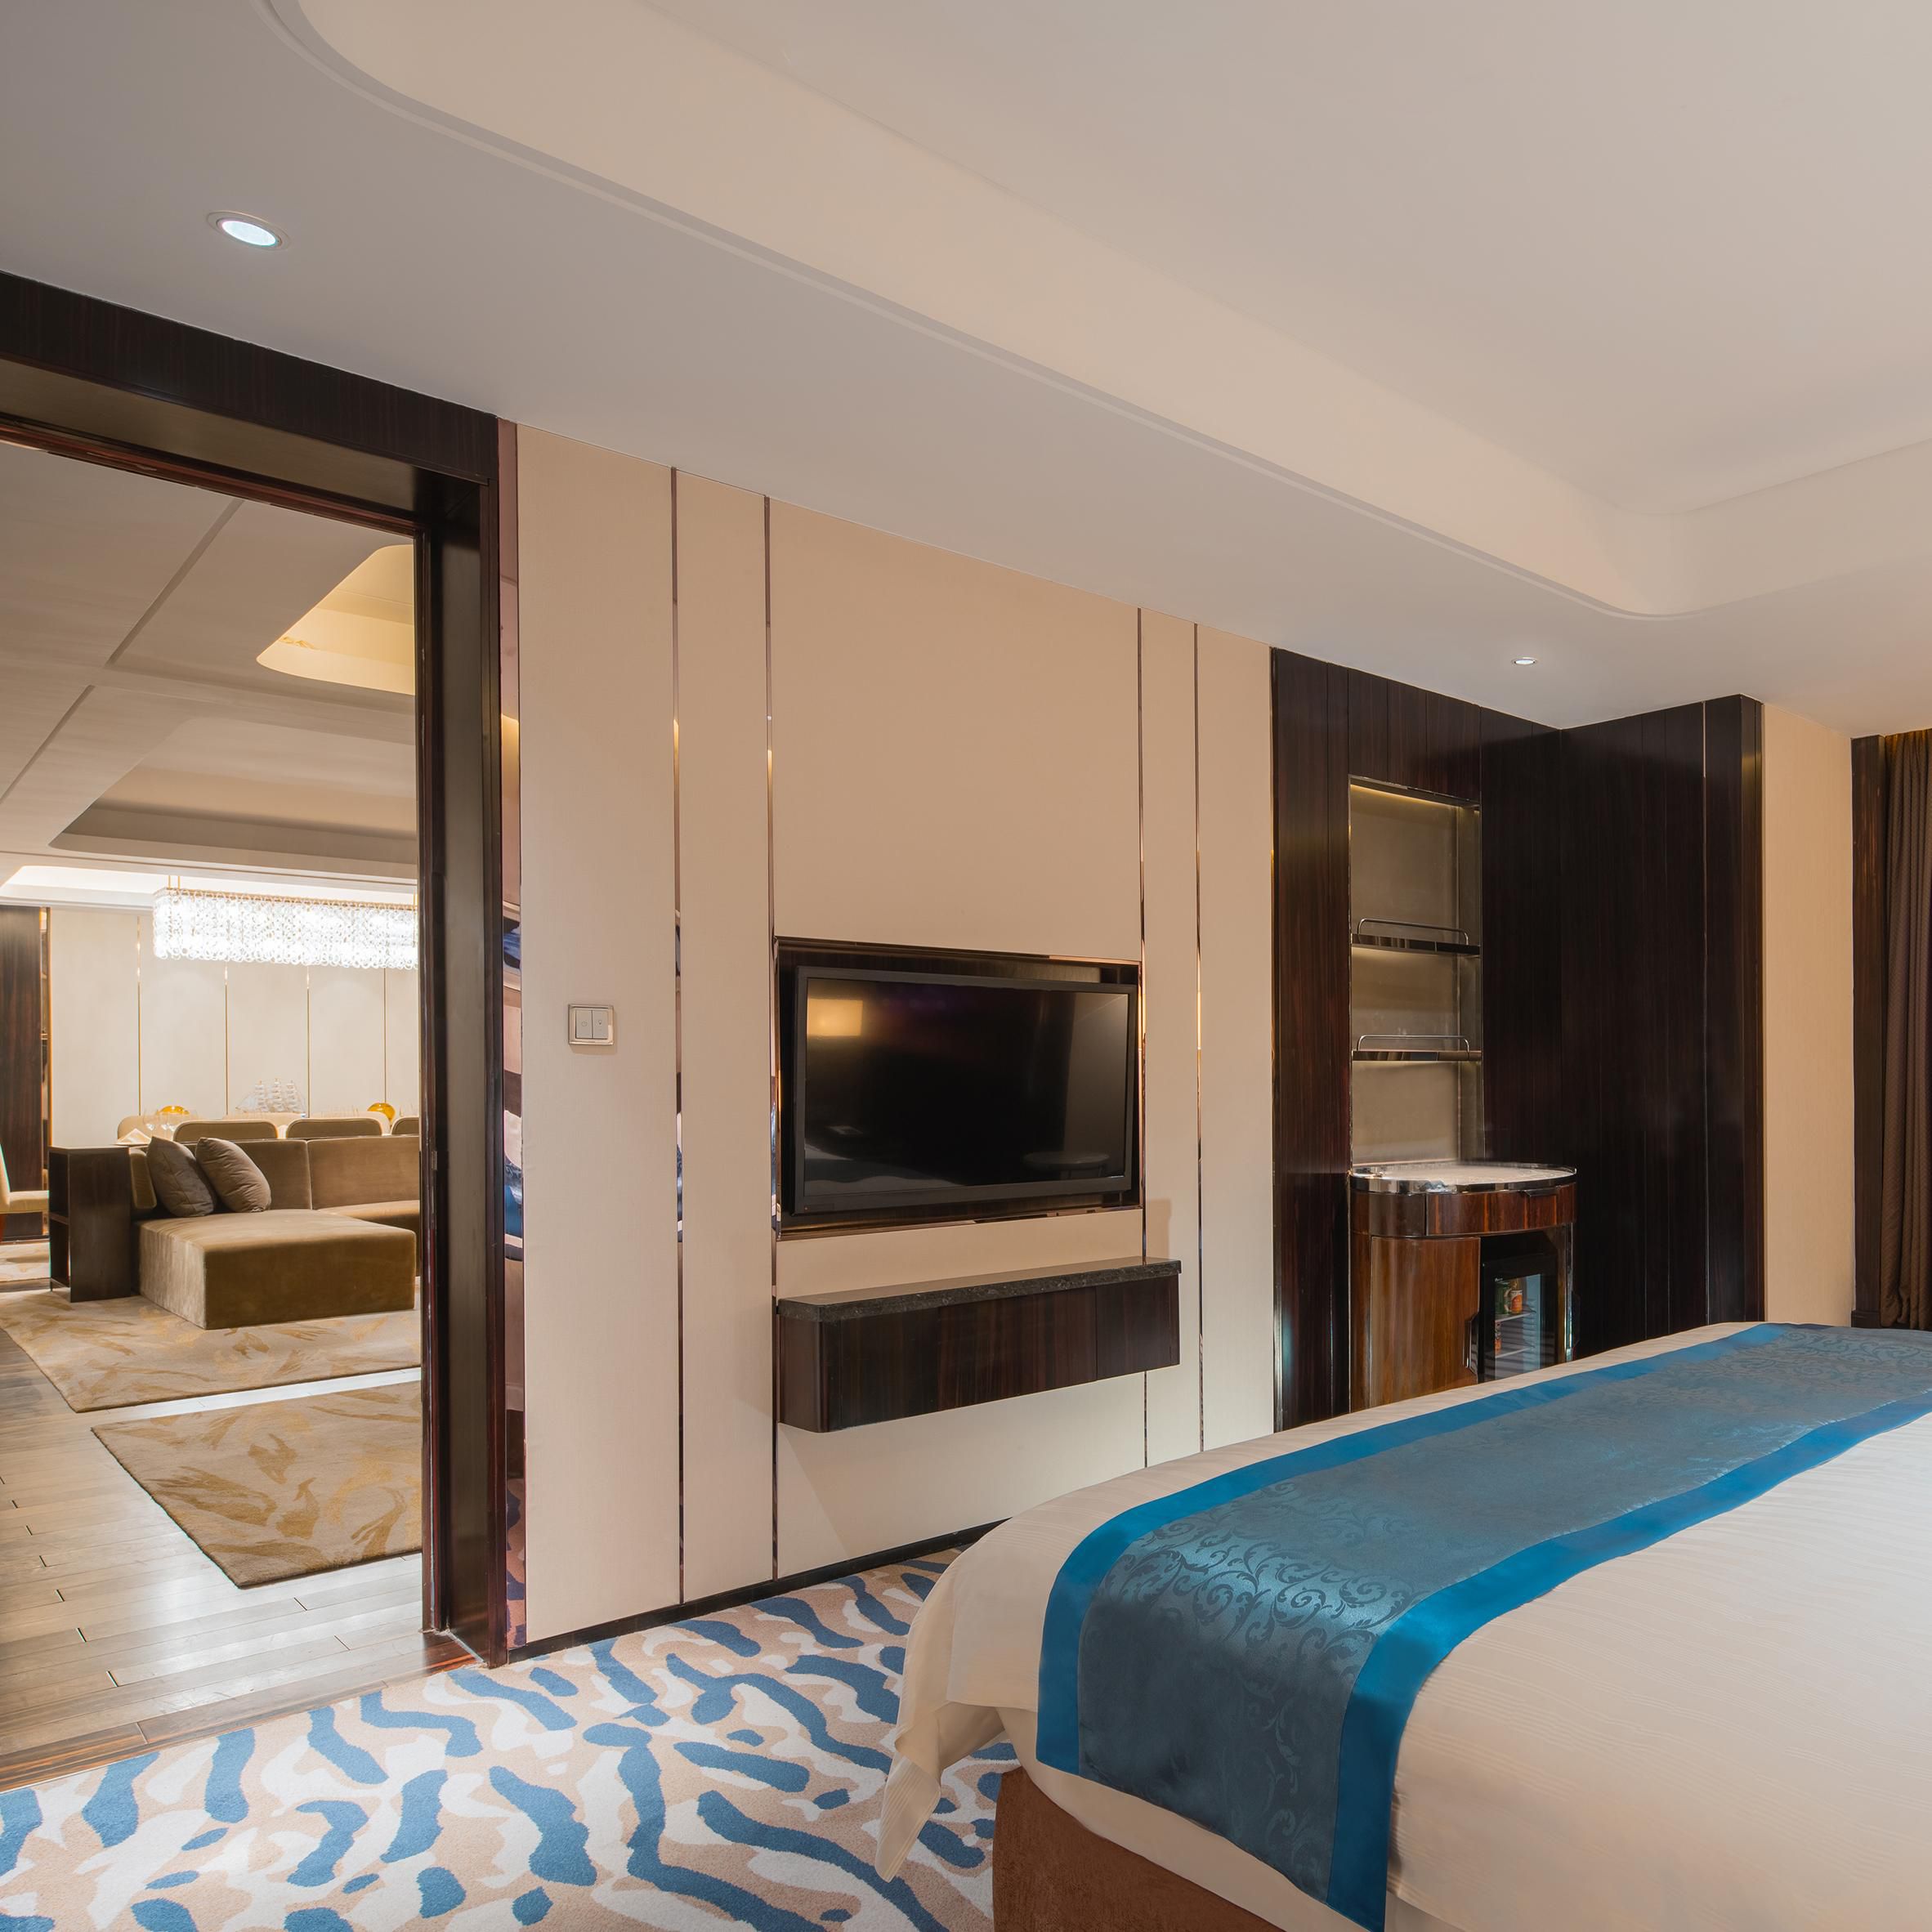 Crowne Plaza Superior Suite - bedroom